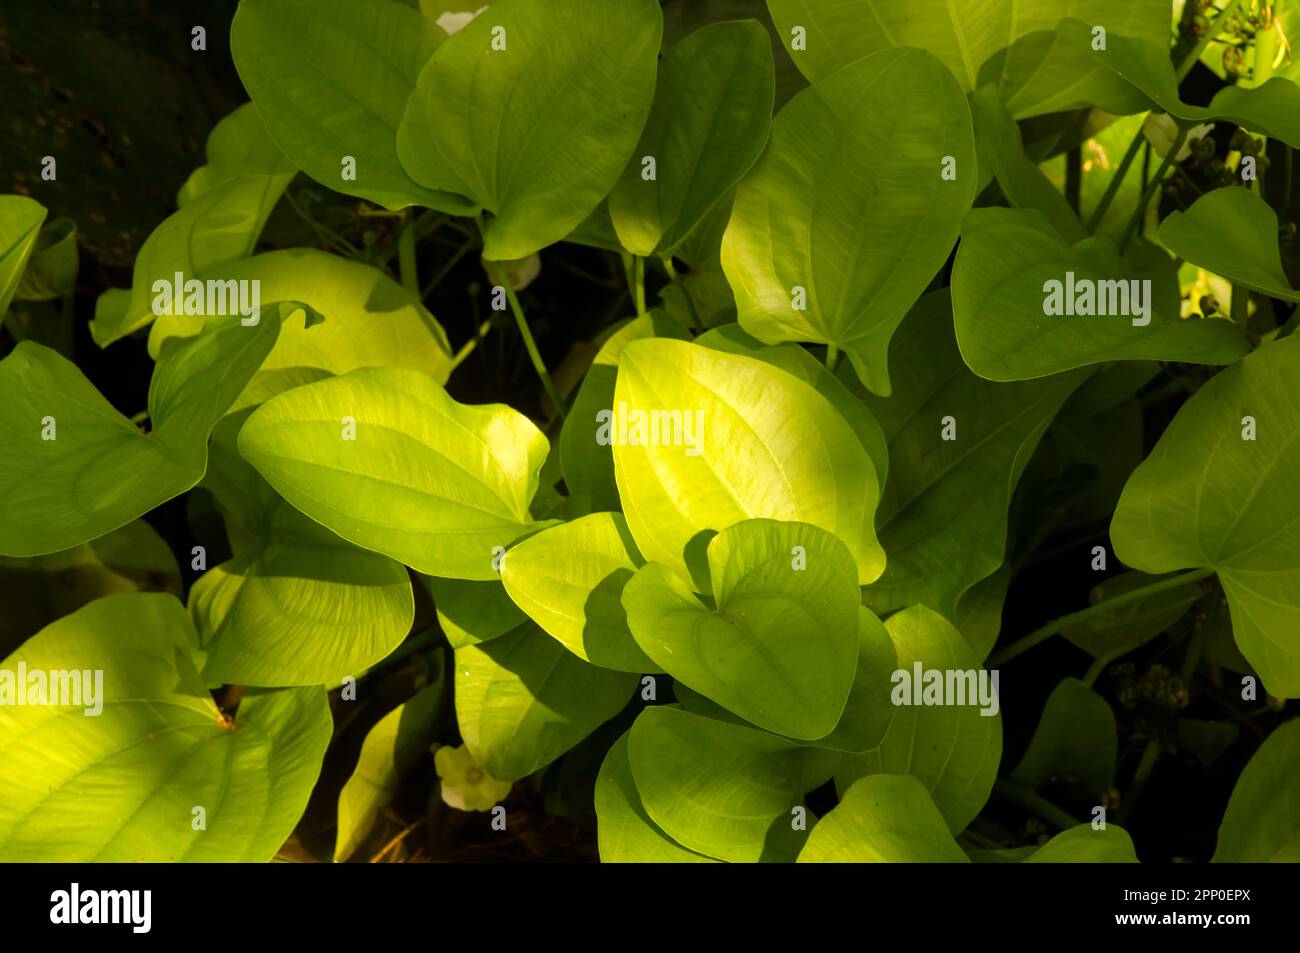 Spade leaf sword, Echinodorus cordifolius green leaves for natural background Stock Photo